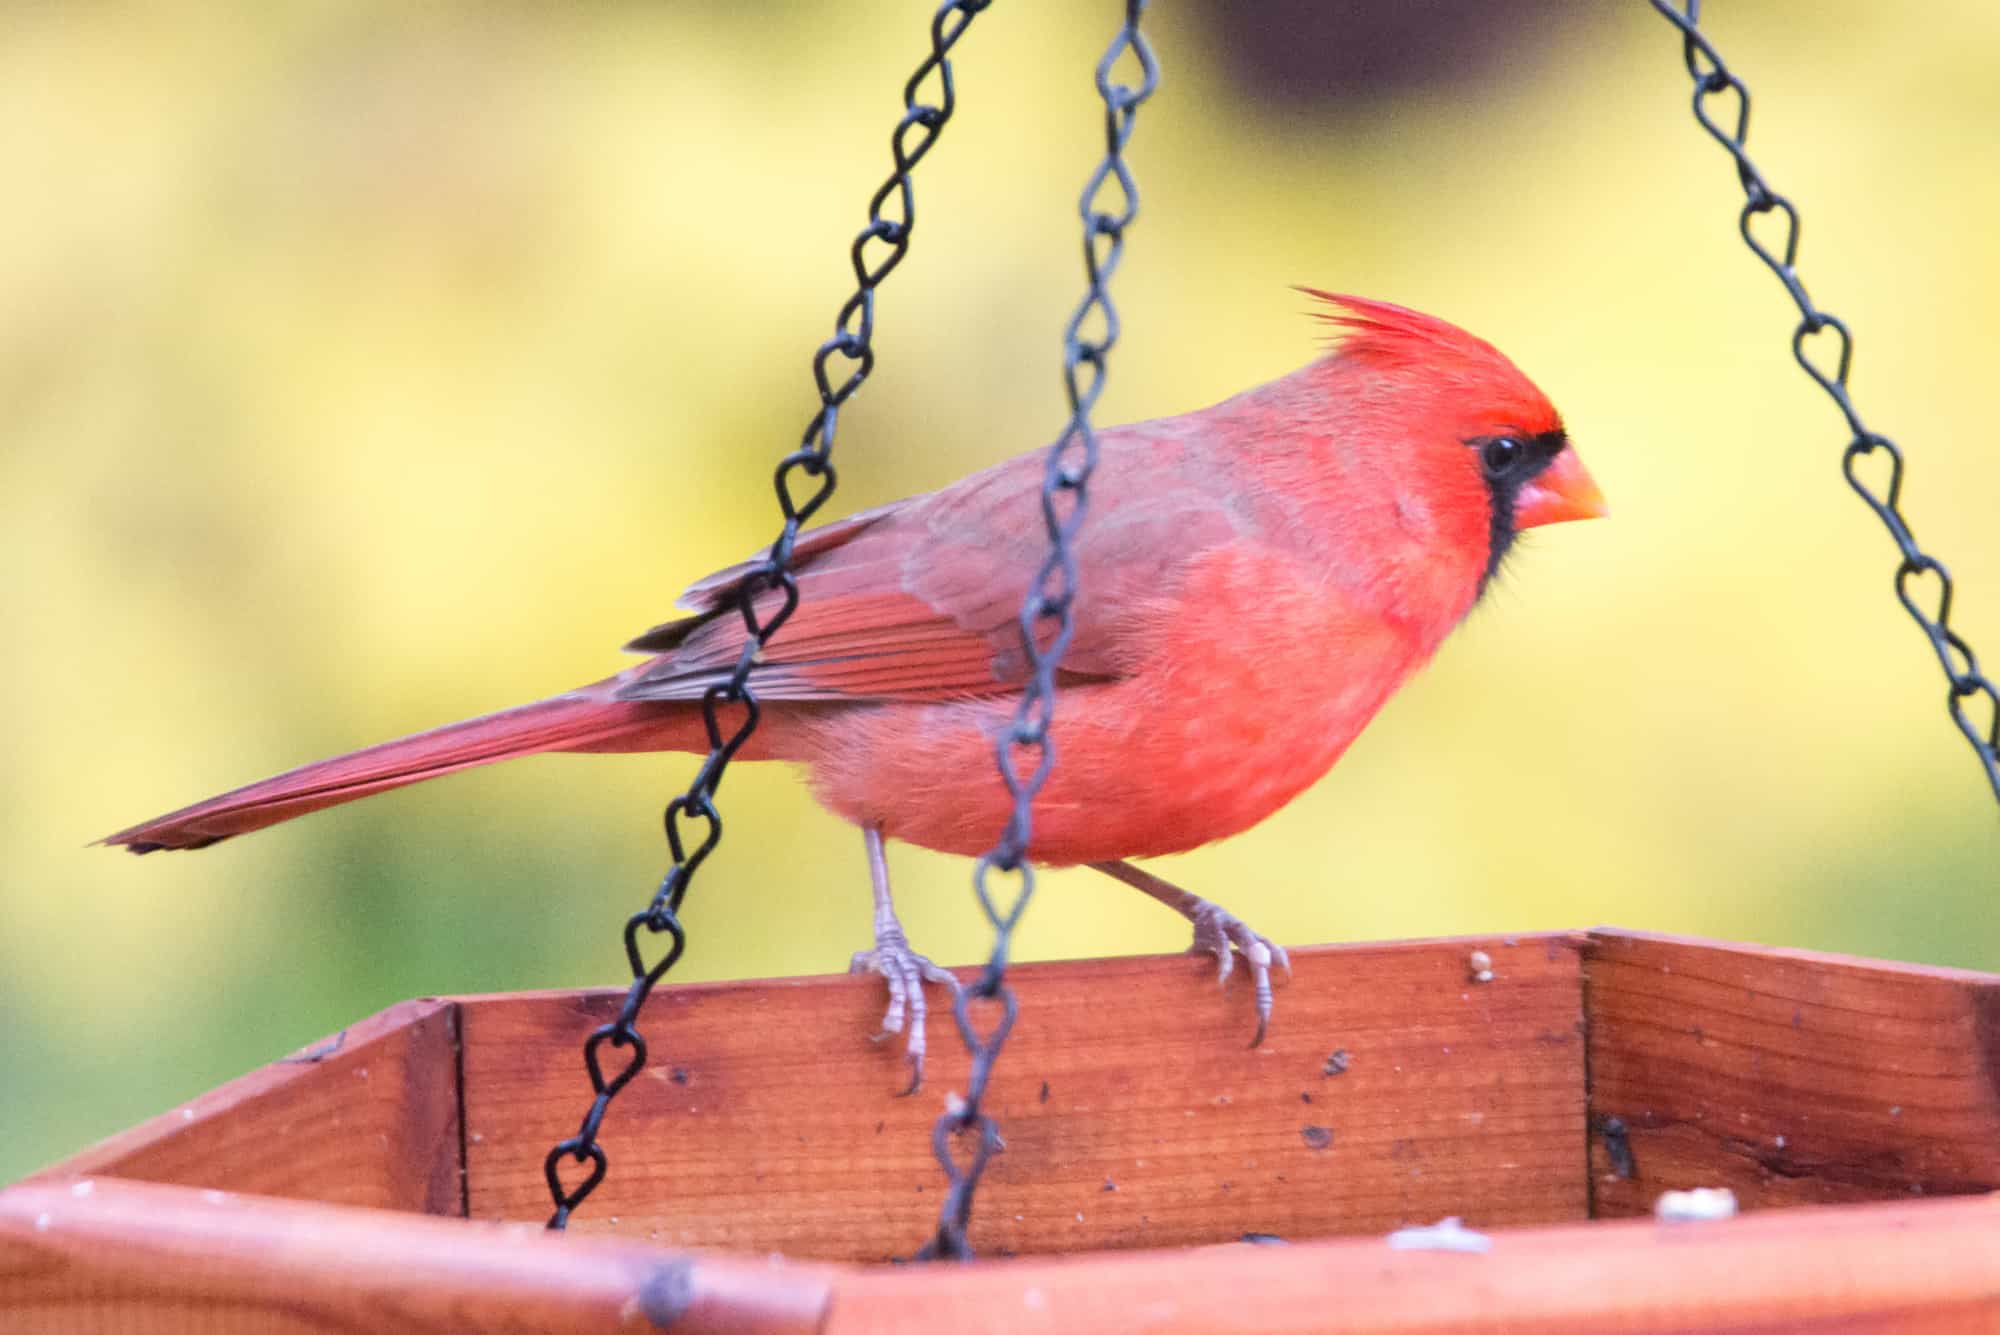 Red cardinal on the platform feeder
